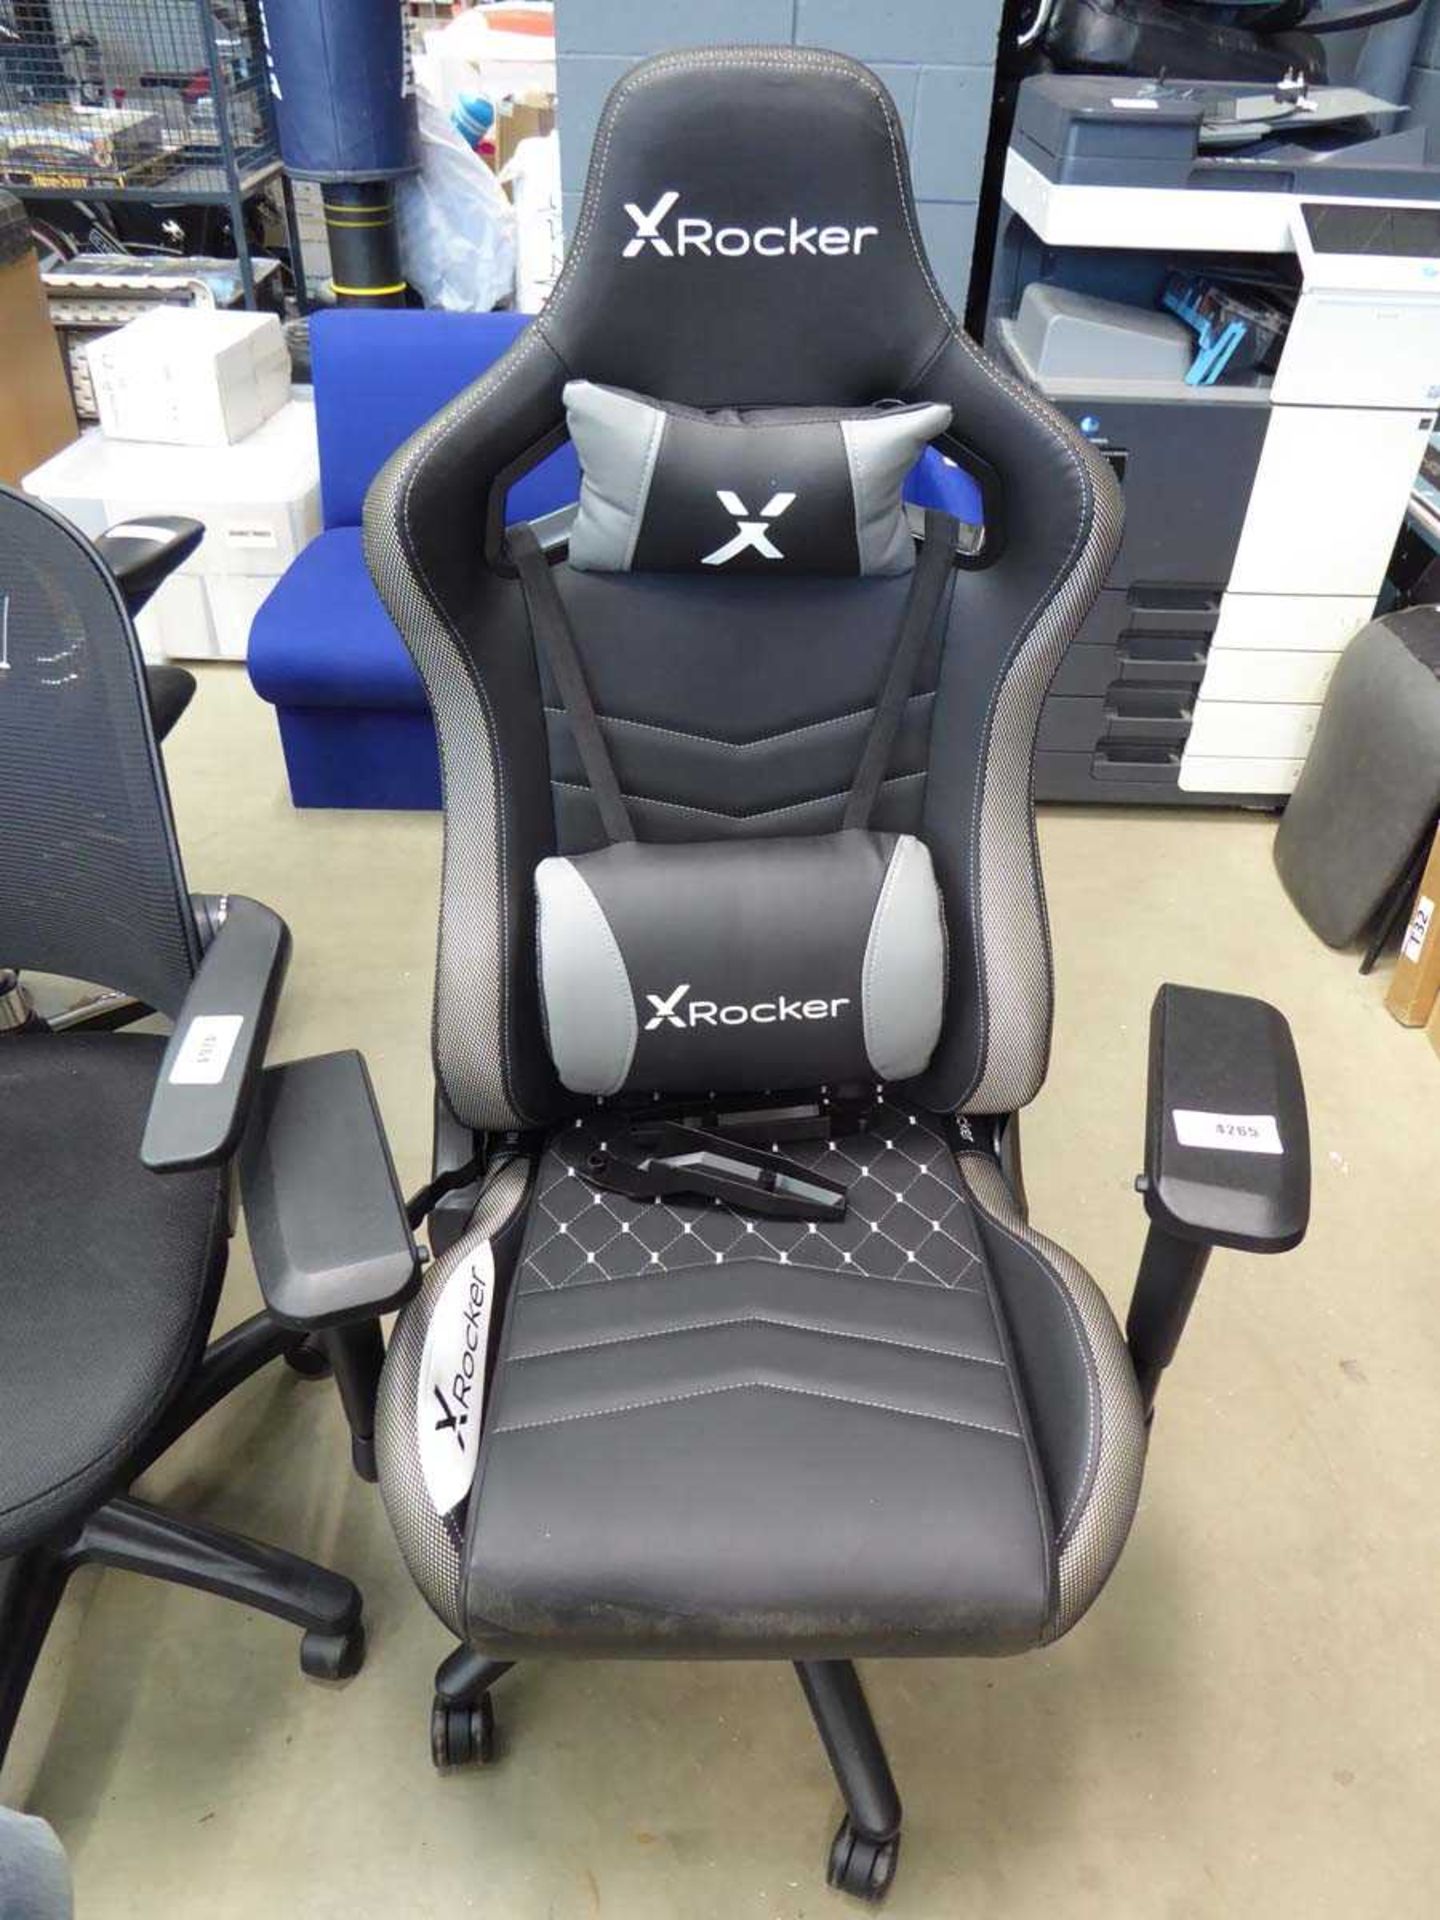 +VAT X Rocker gaming style chair